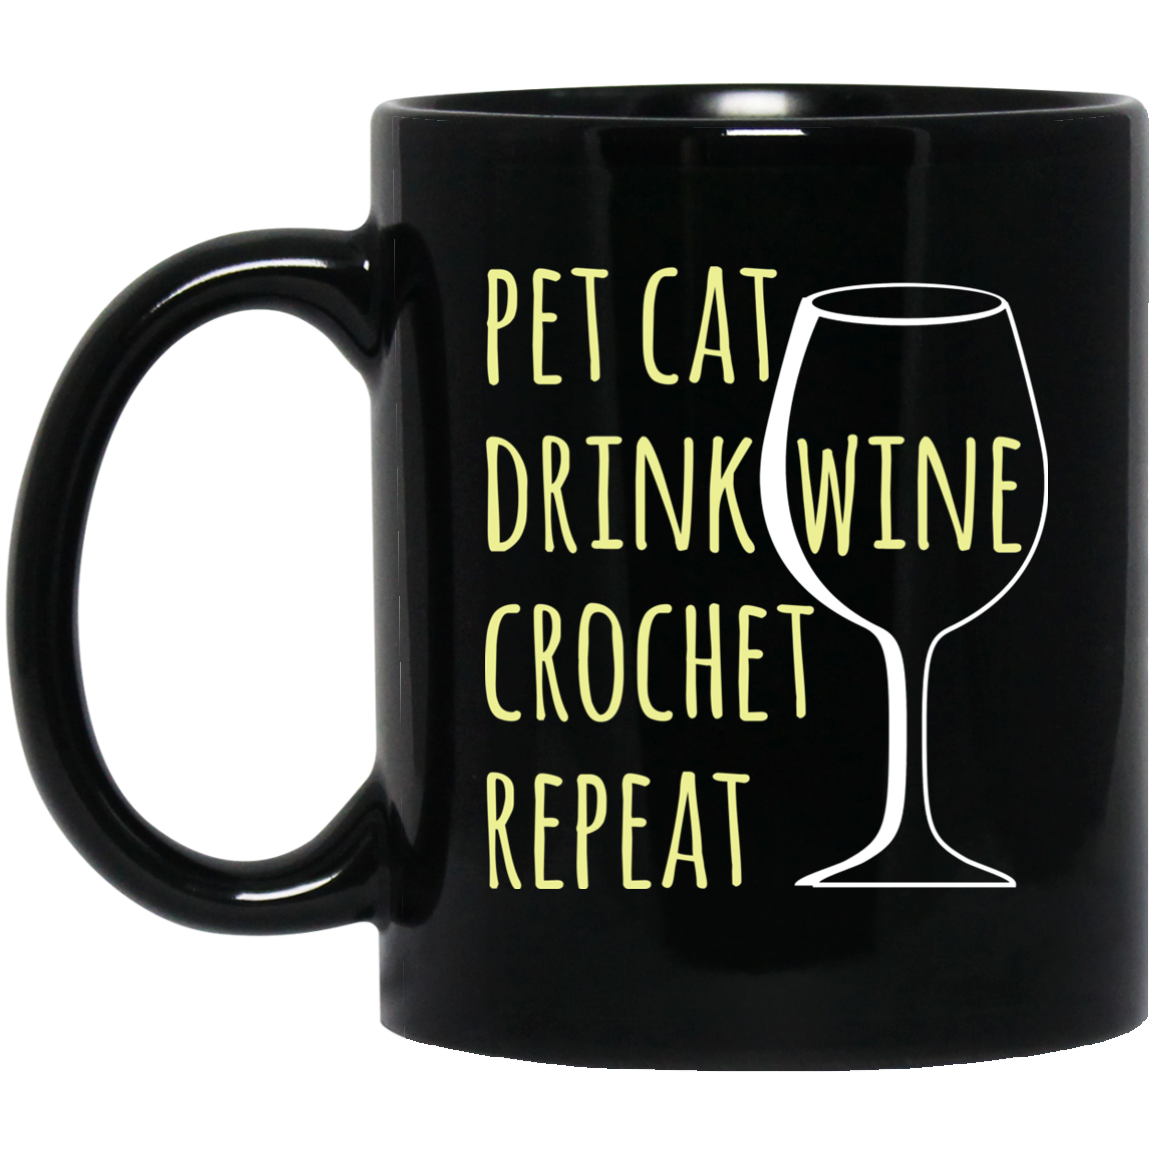 Pet Cat-Drink Wine-Crochet Black Mugs